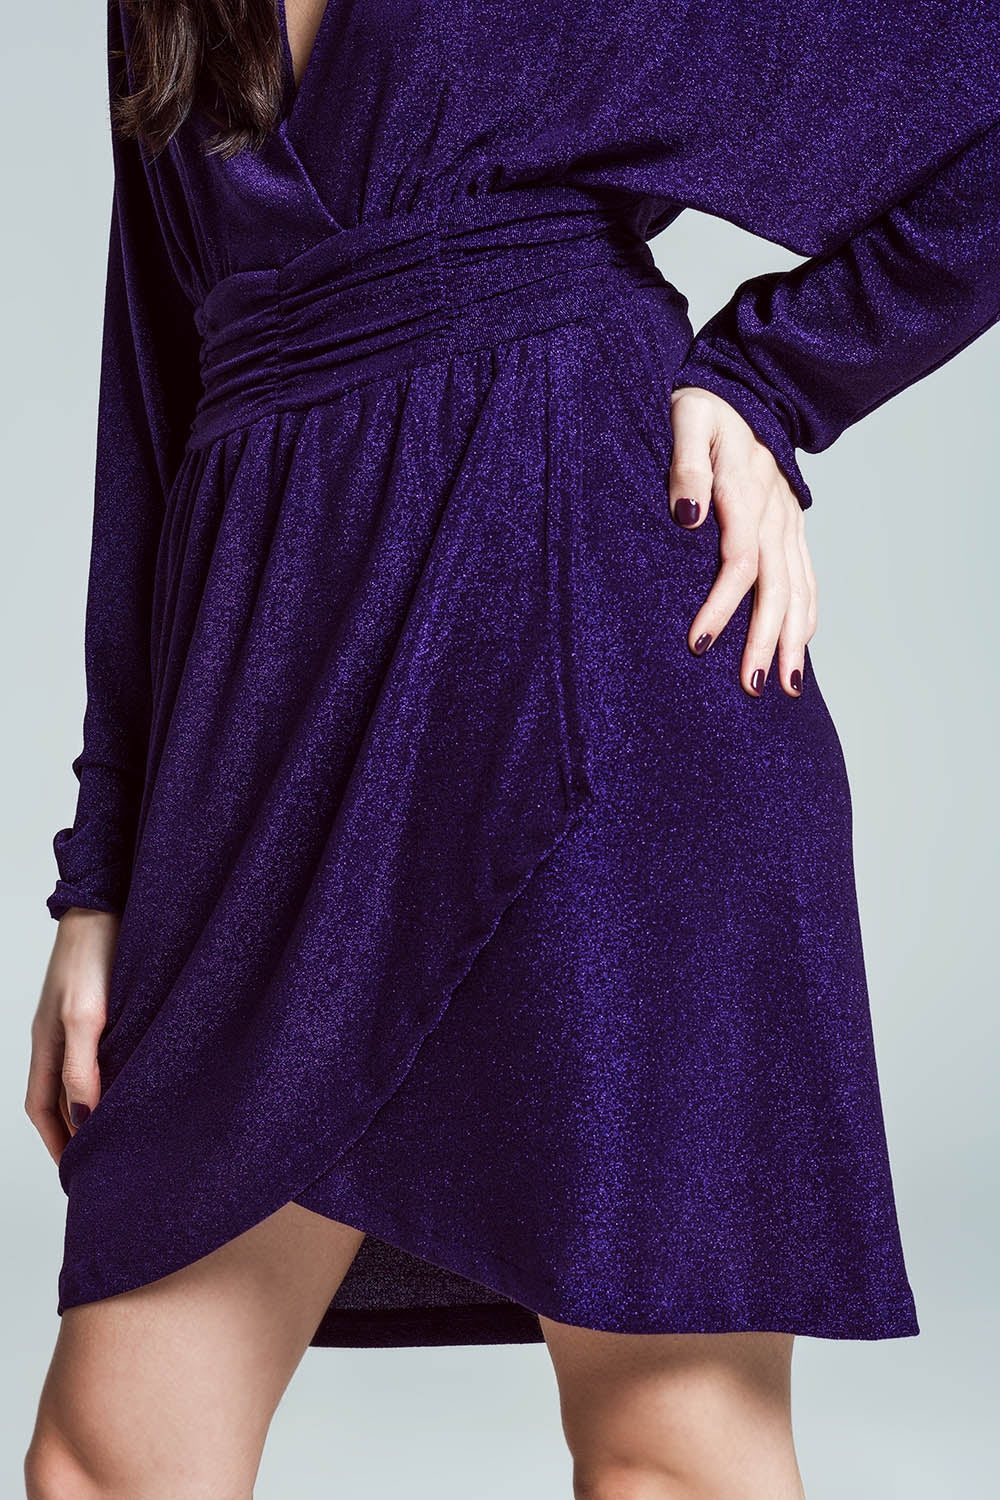 Mini length glitter dress with deep V neck in purple